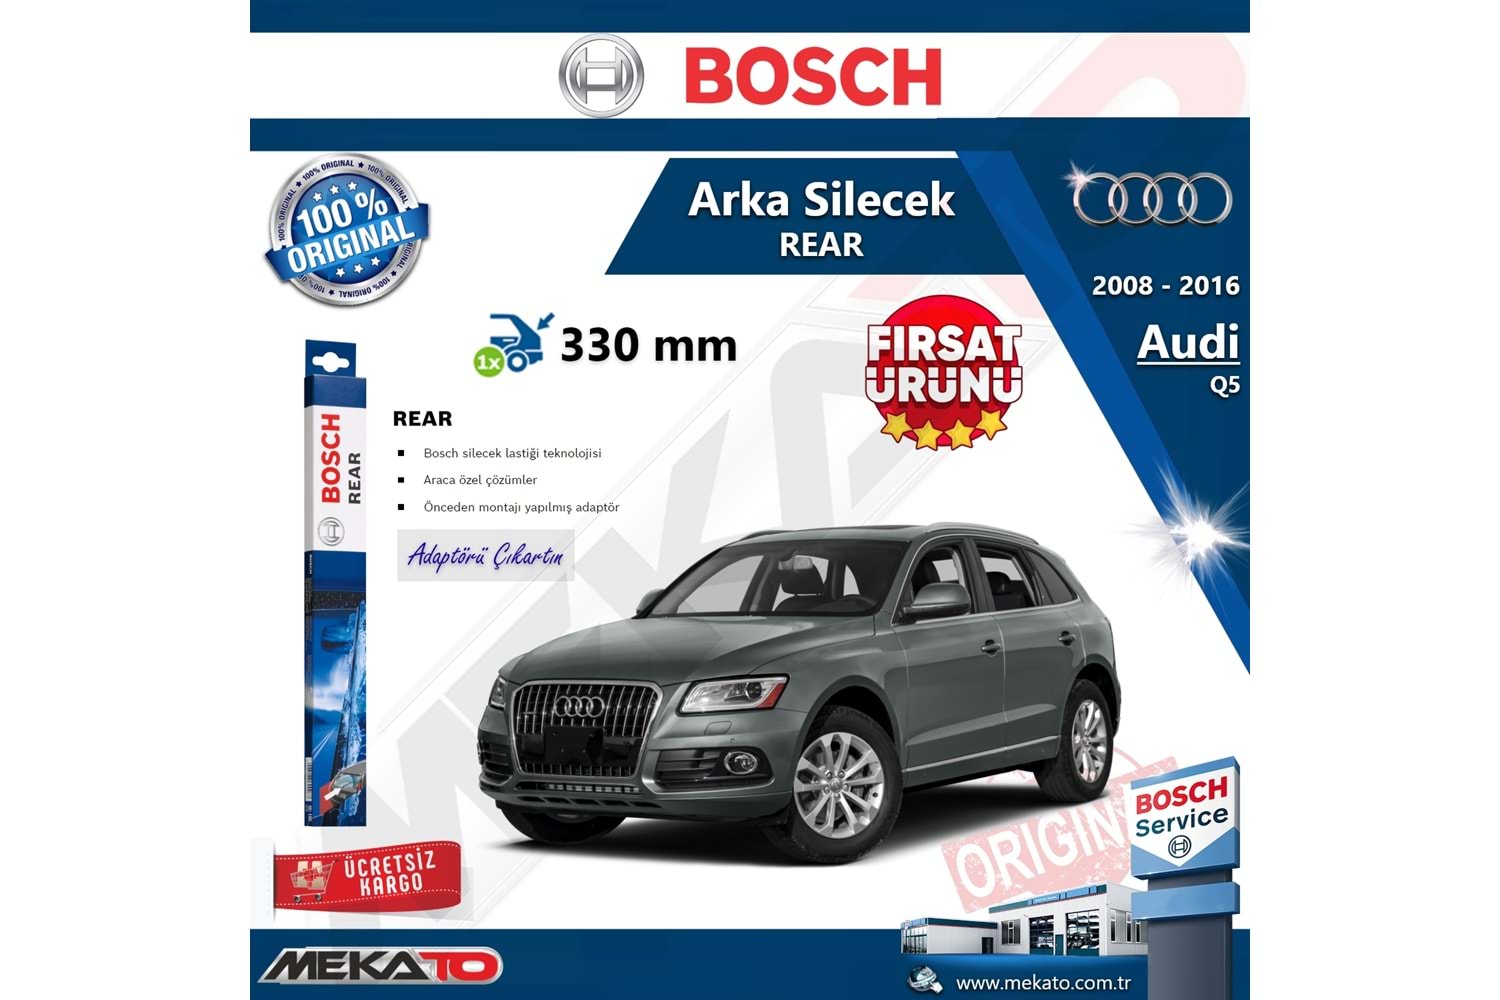 Audi Q5 Arka Silecek Bosch Rear 2008-2016